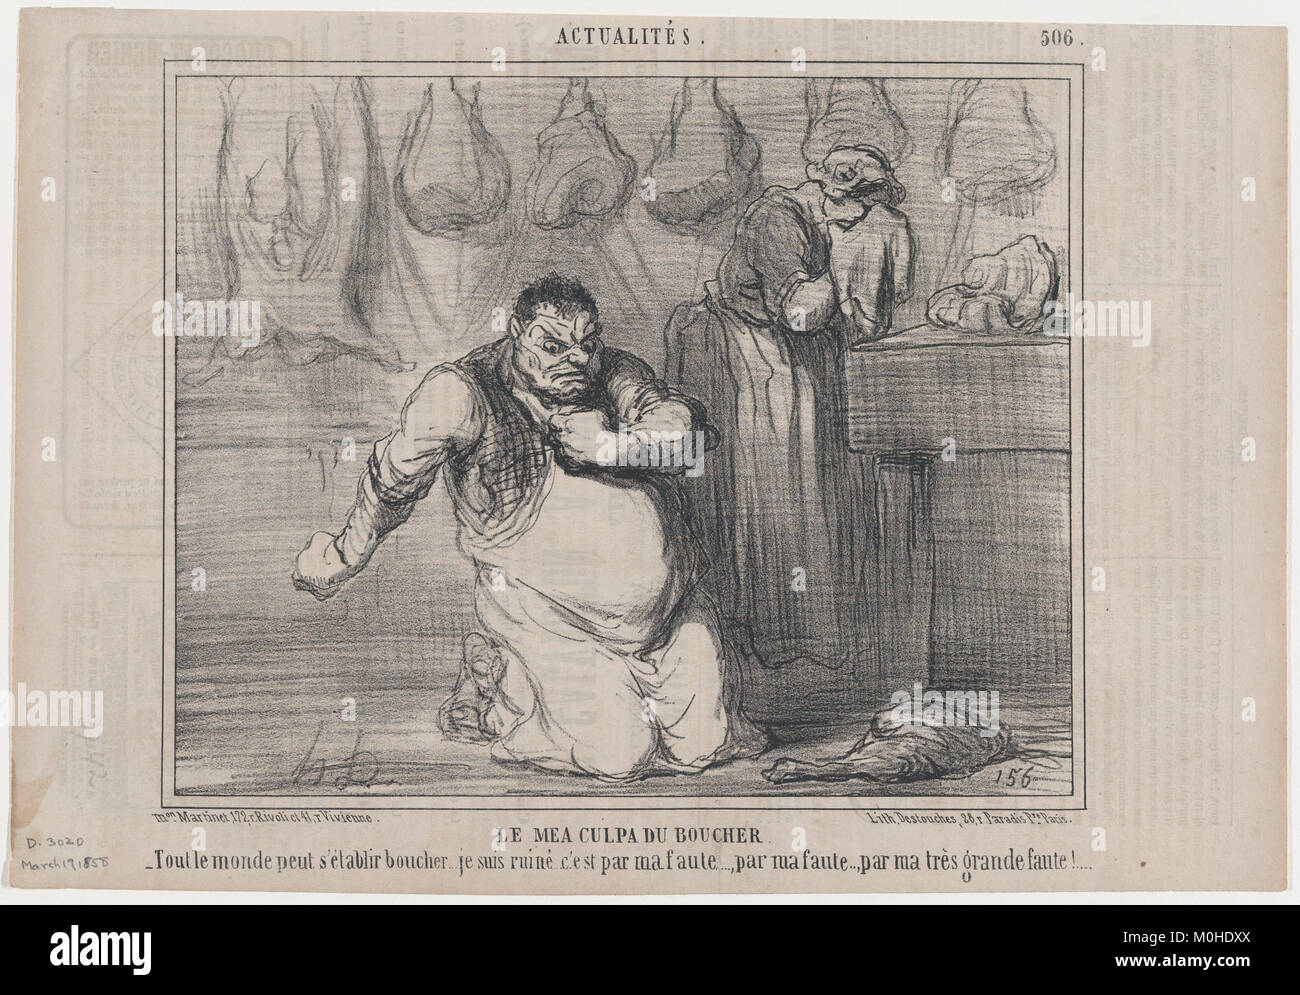 Le mea culpa du boucher, from Actualités, published in Le Charivari, March 19, 1858 MET DP876687 Stock Photo